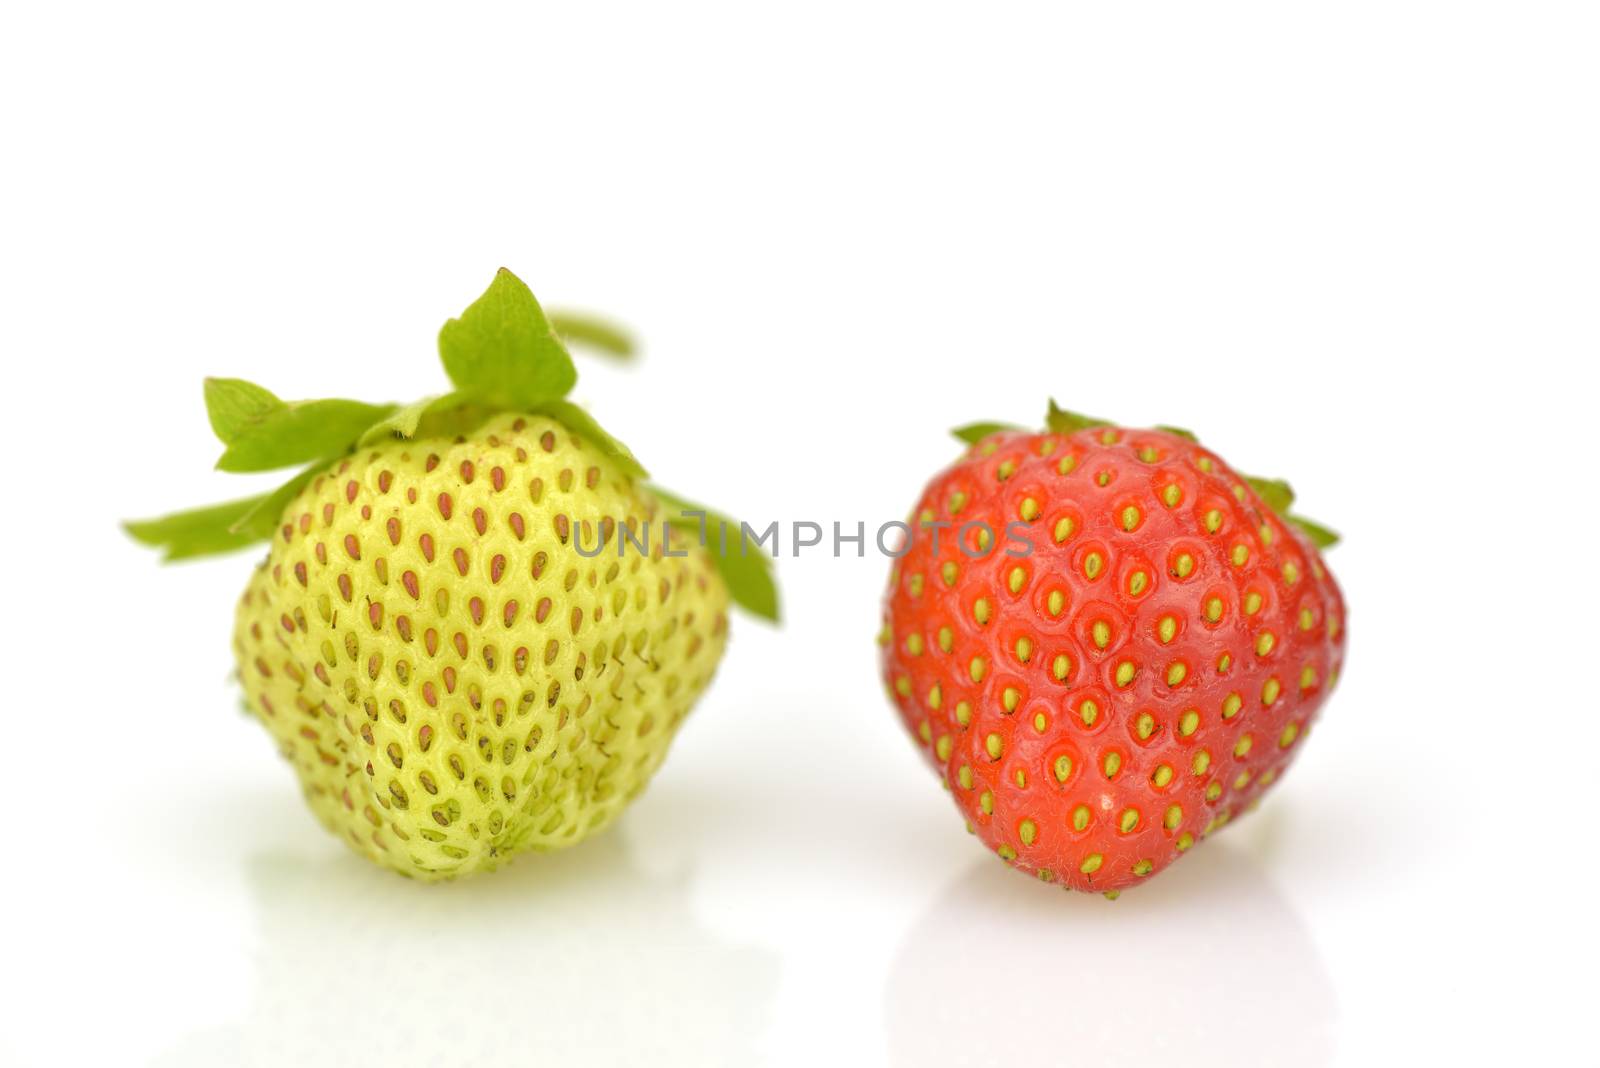 Ripe and unripe strawberries by Hbak